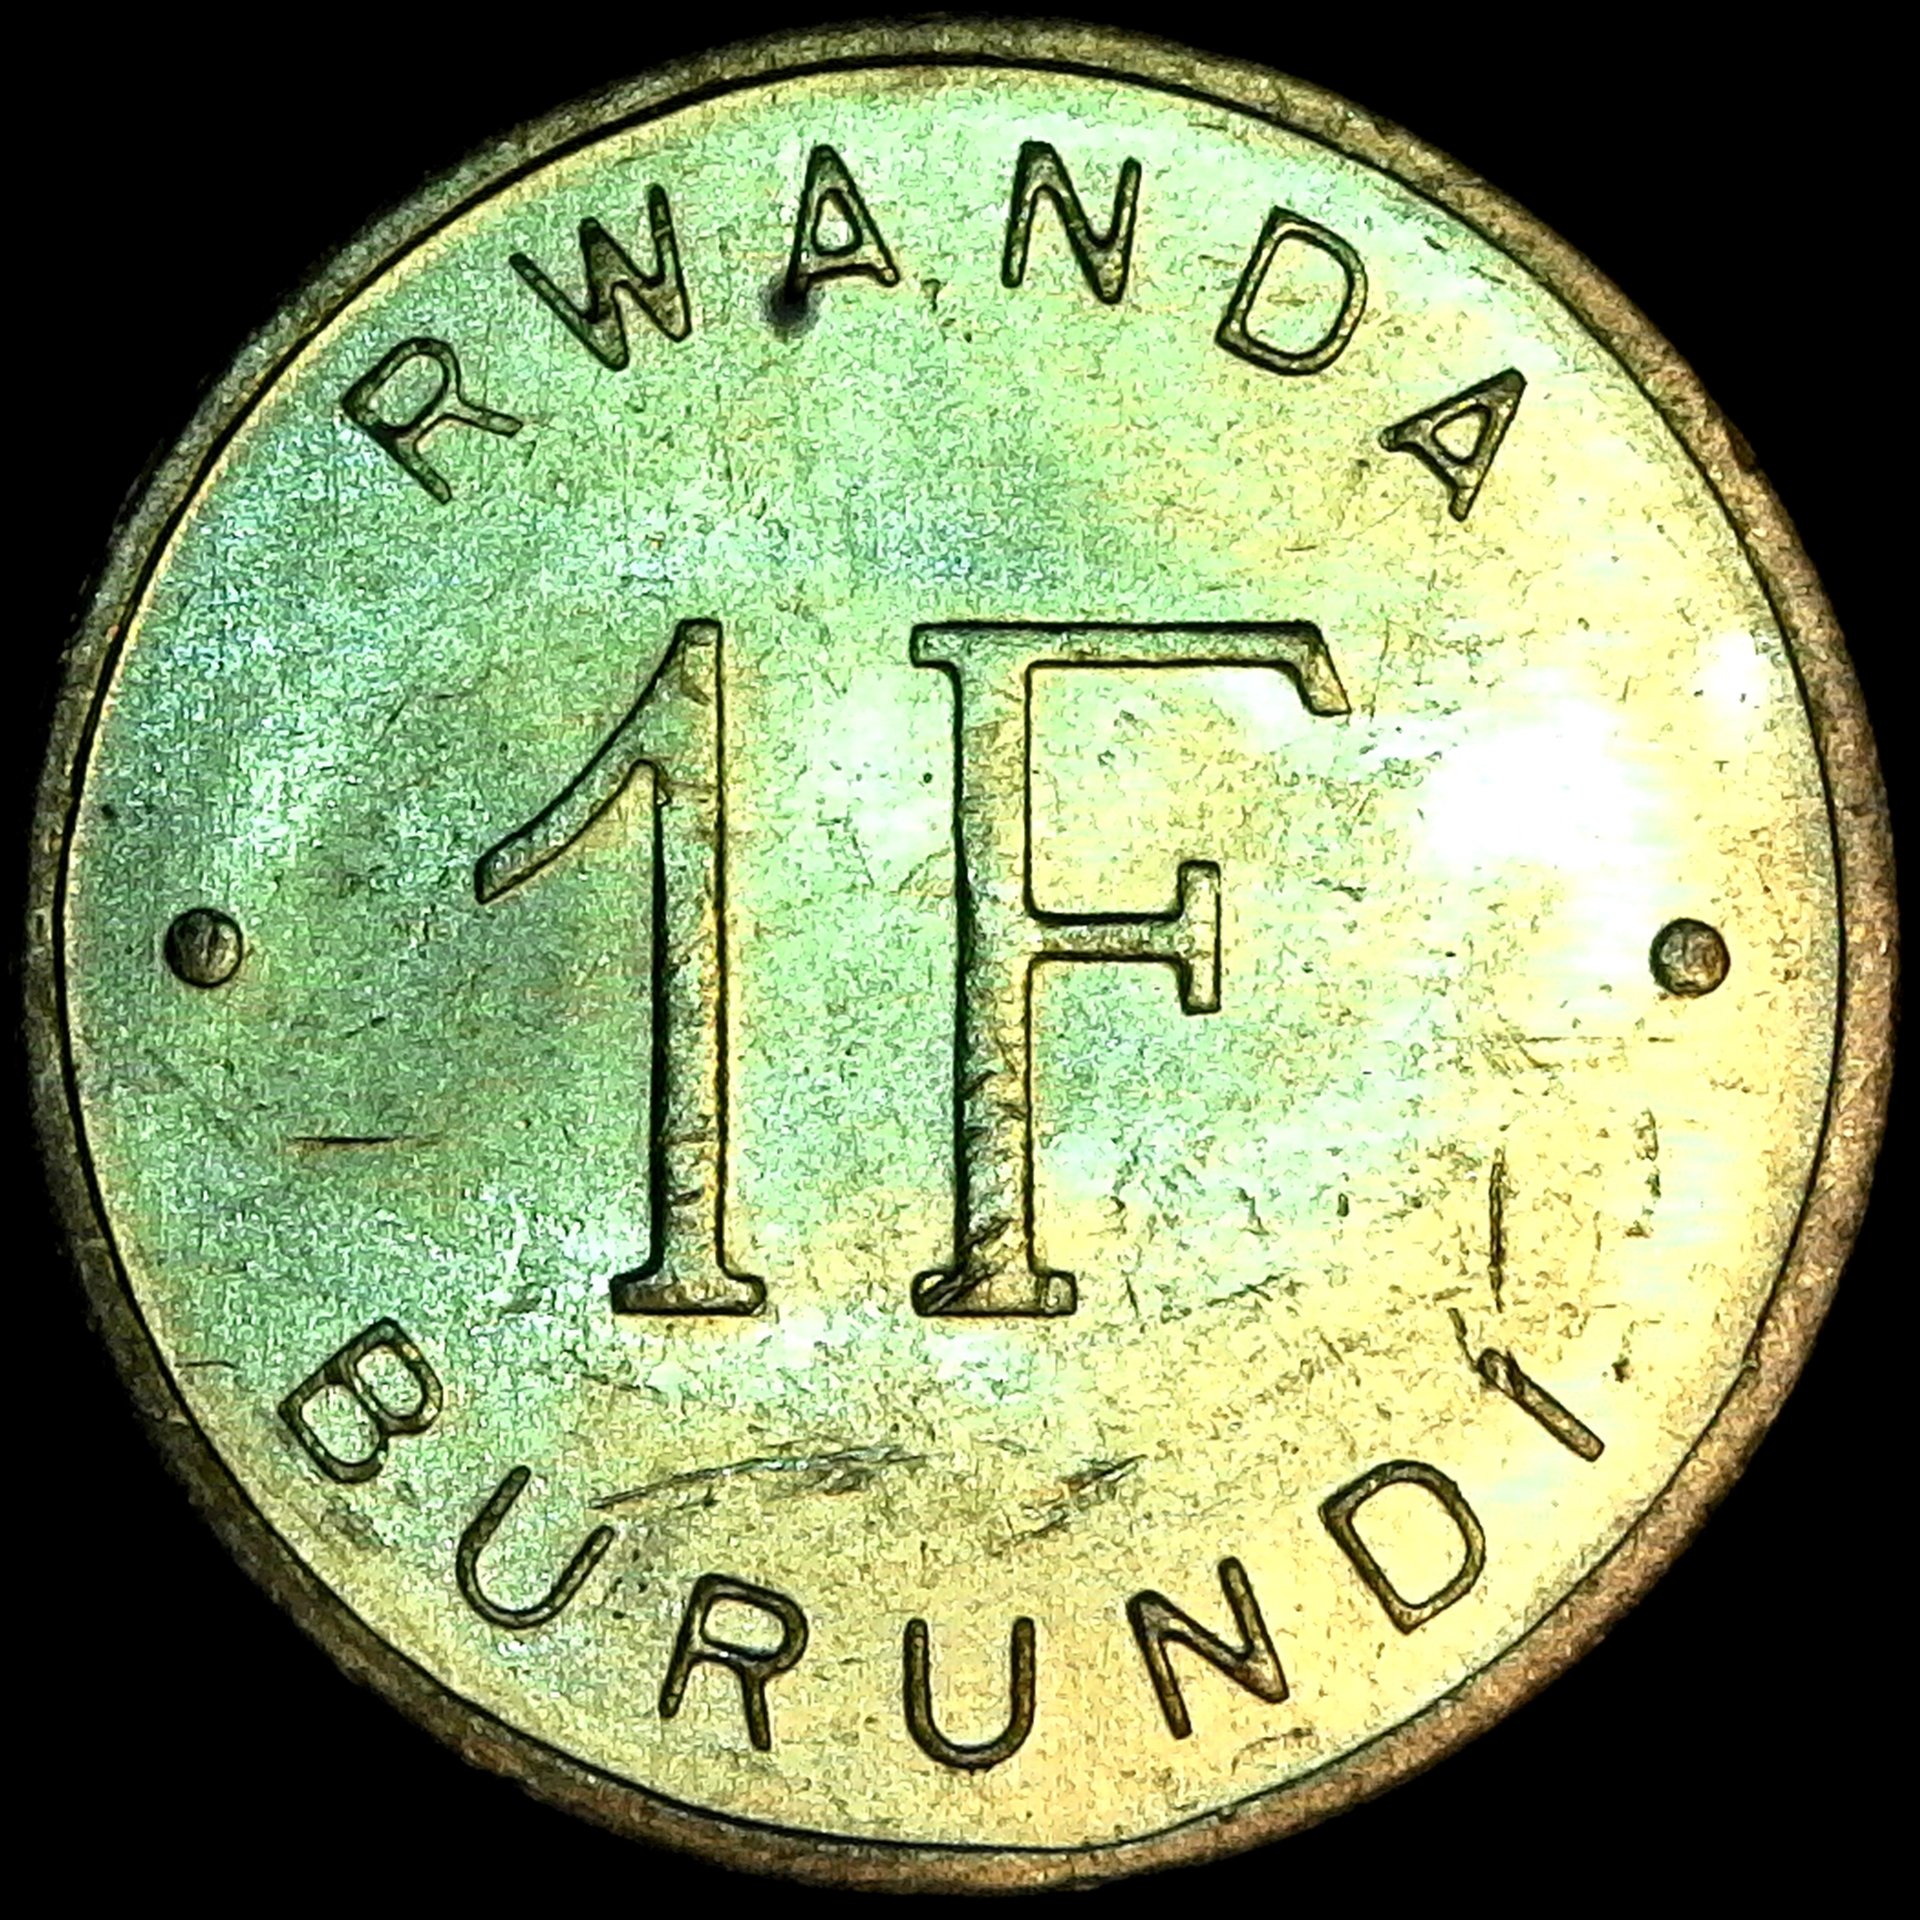 Rwanda Burundi 1 Franc 1961 reverse.jpg